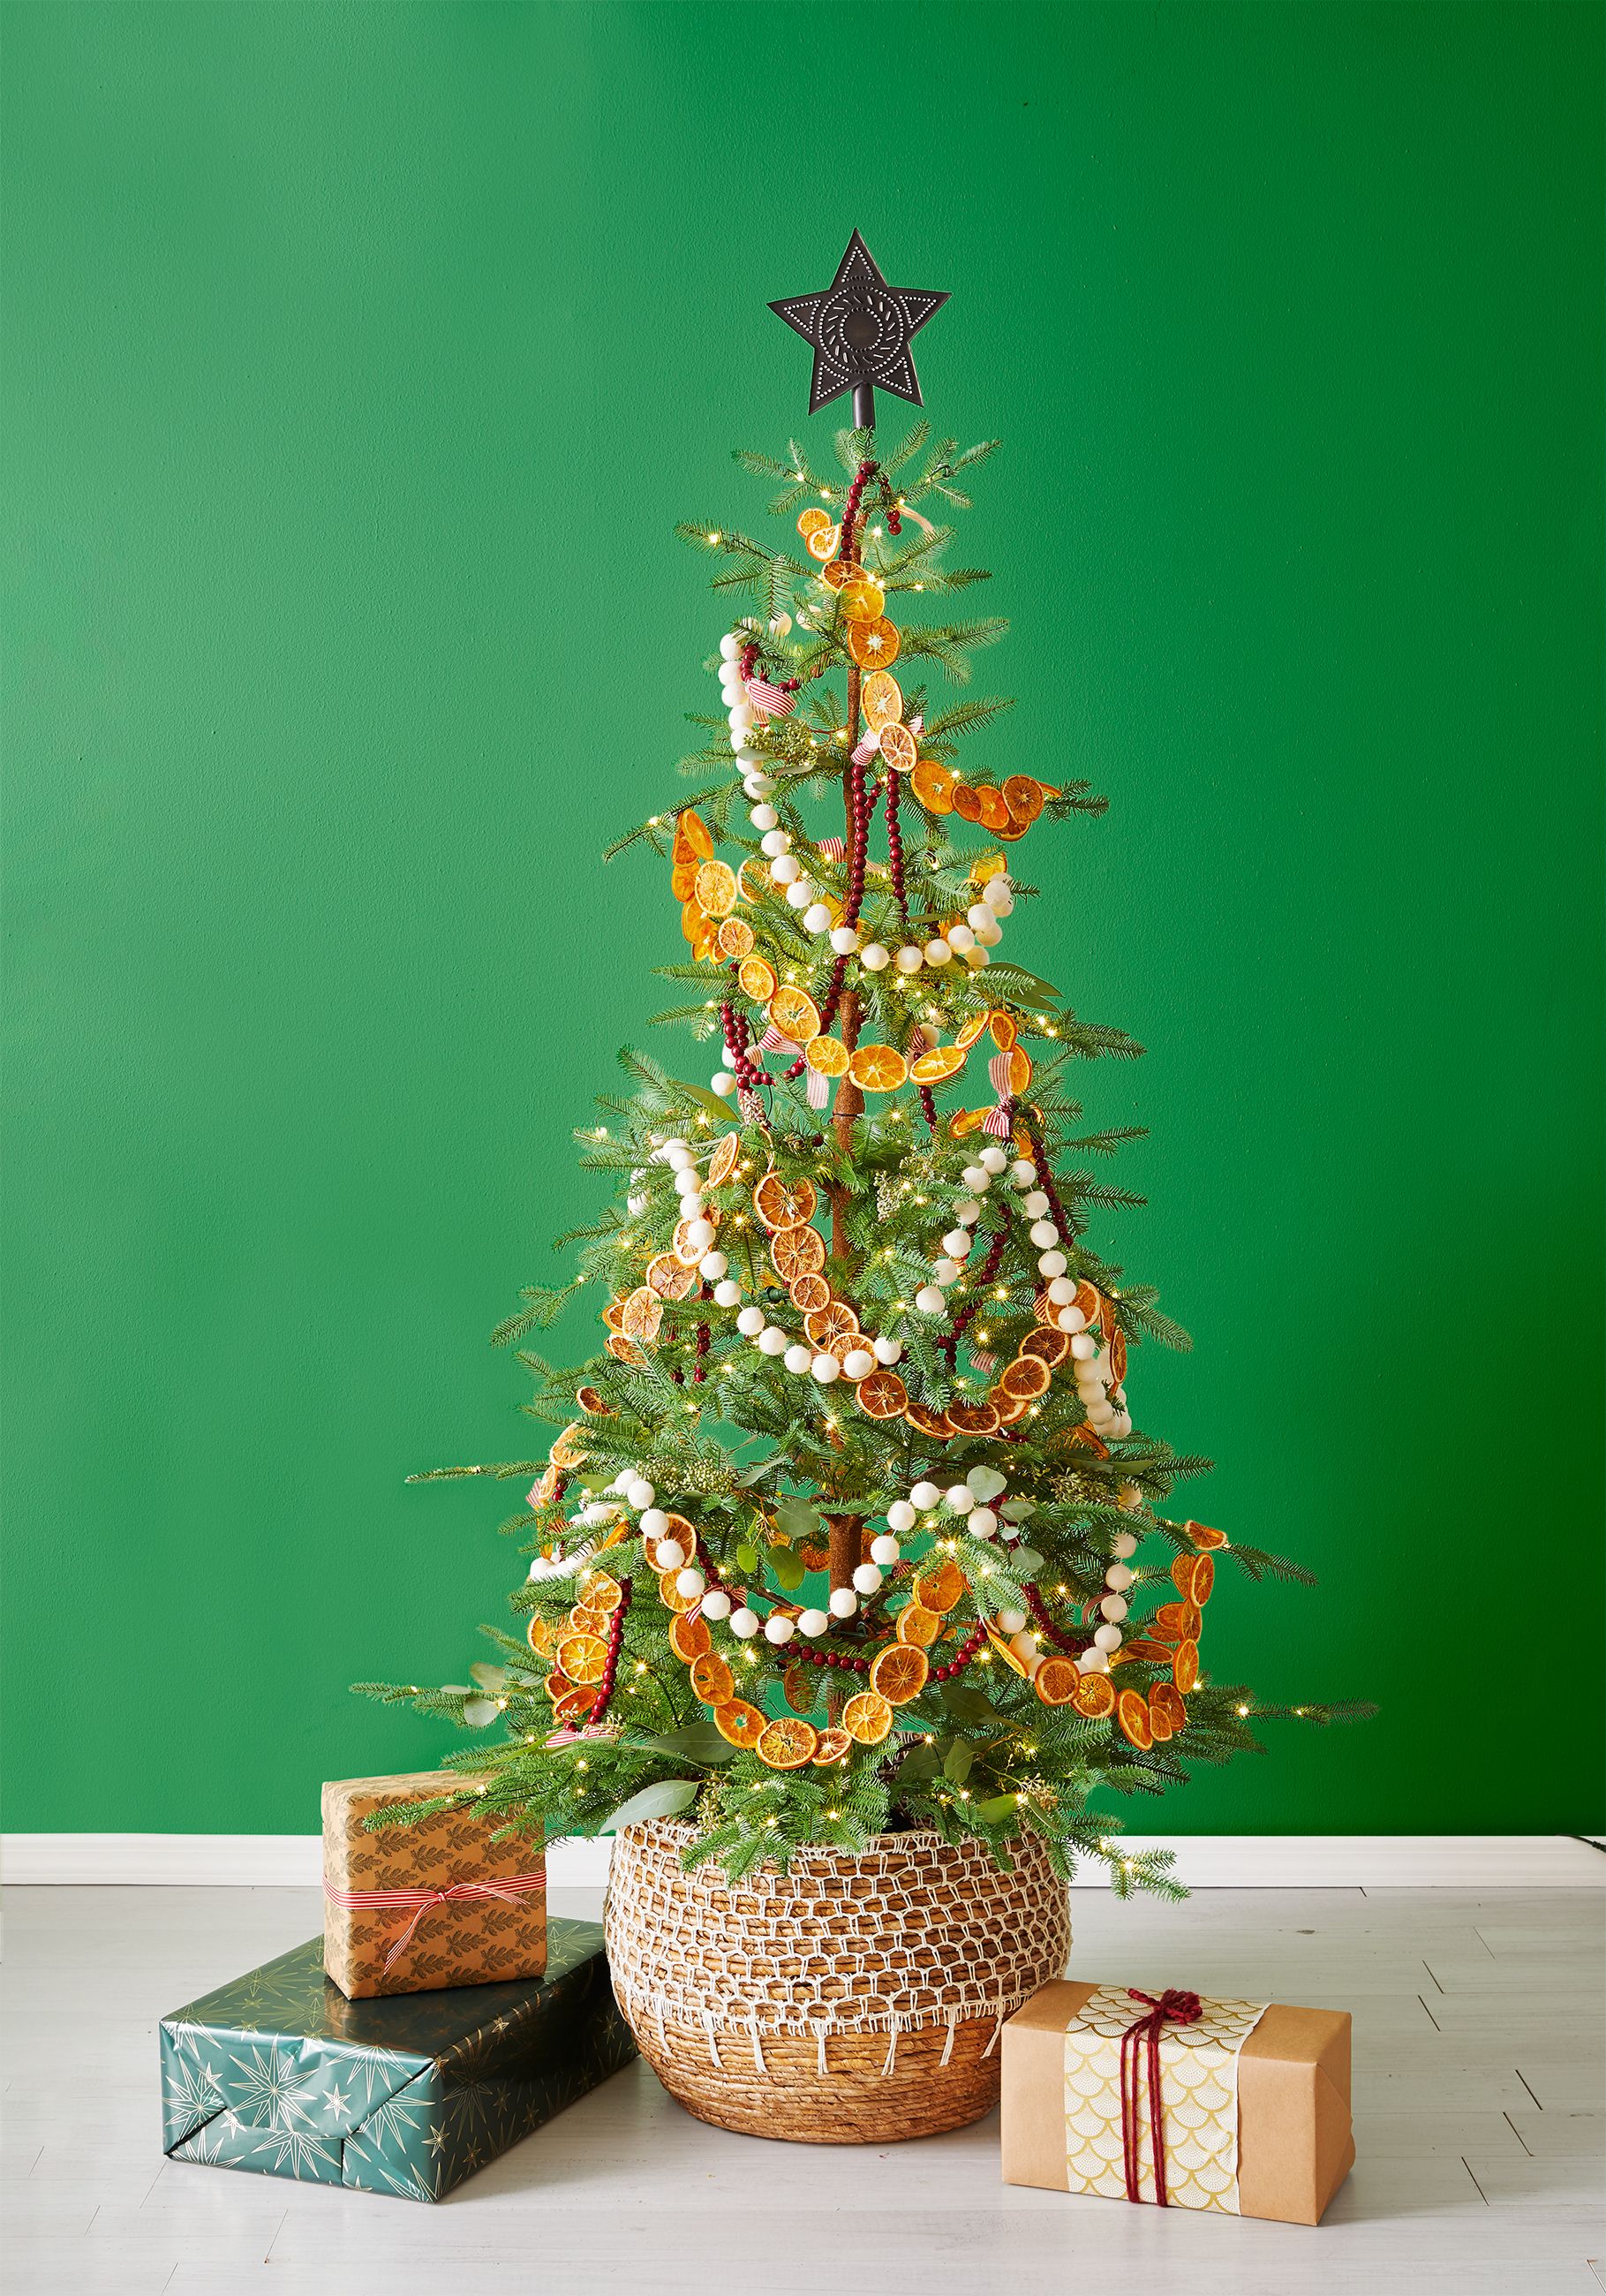 10 Santa Claus Christmas Tree Decorating Ideas to Make Your Holidays